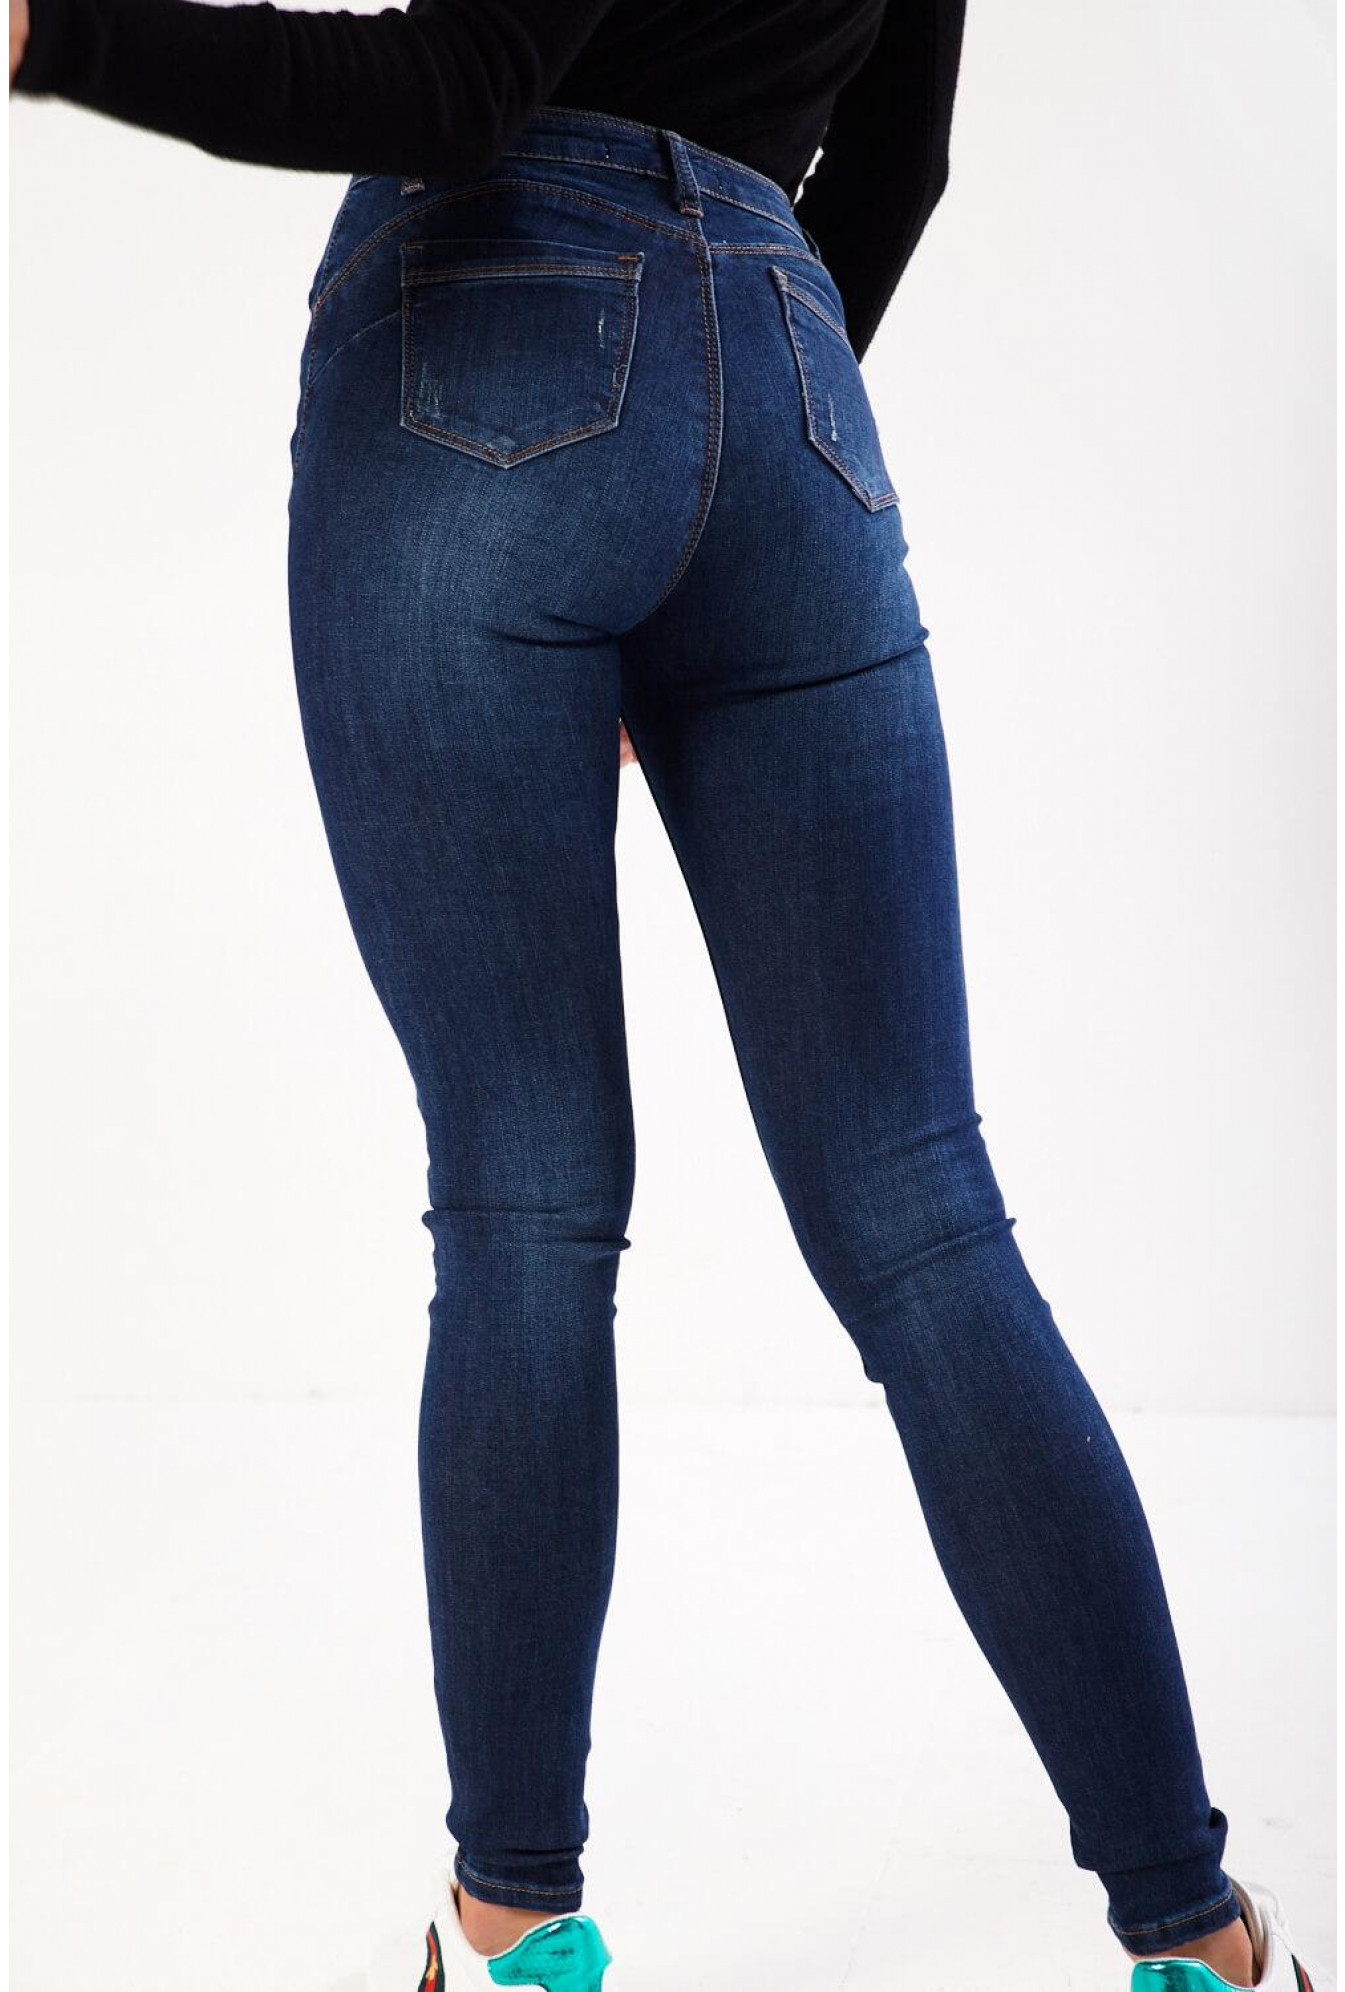 shiny design jeans